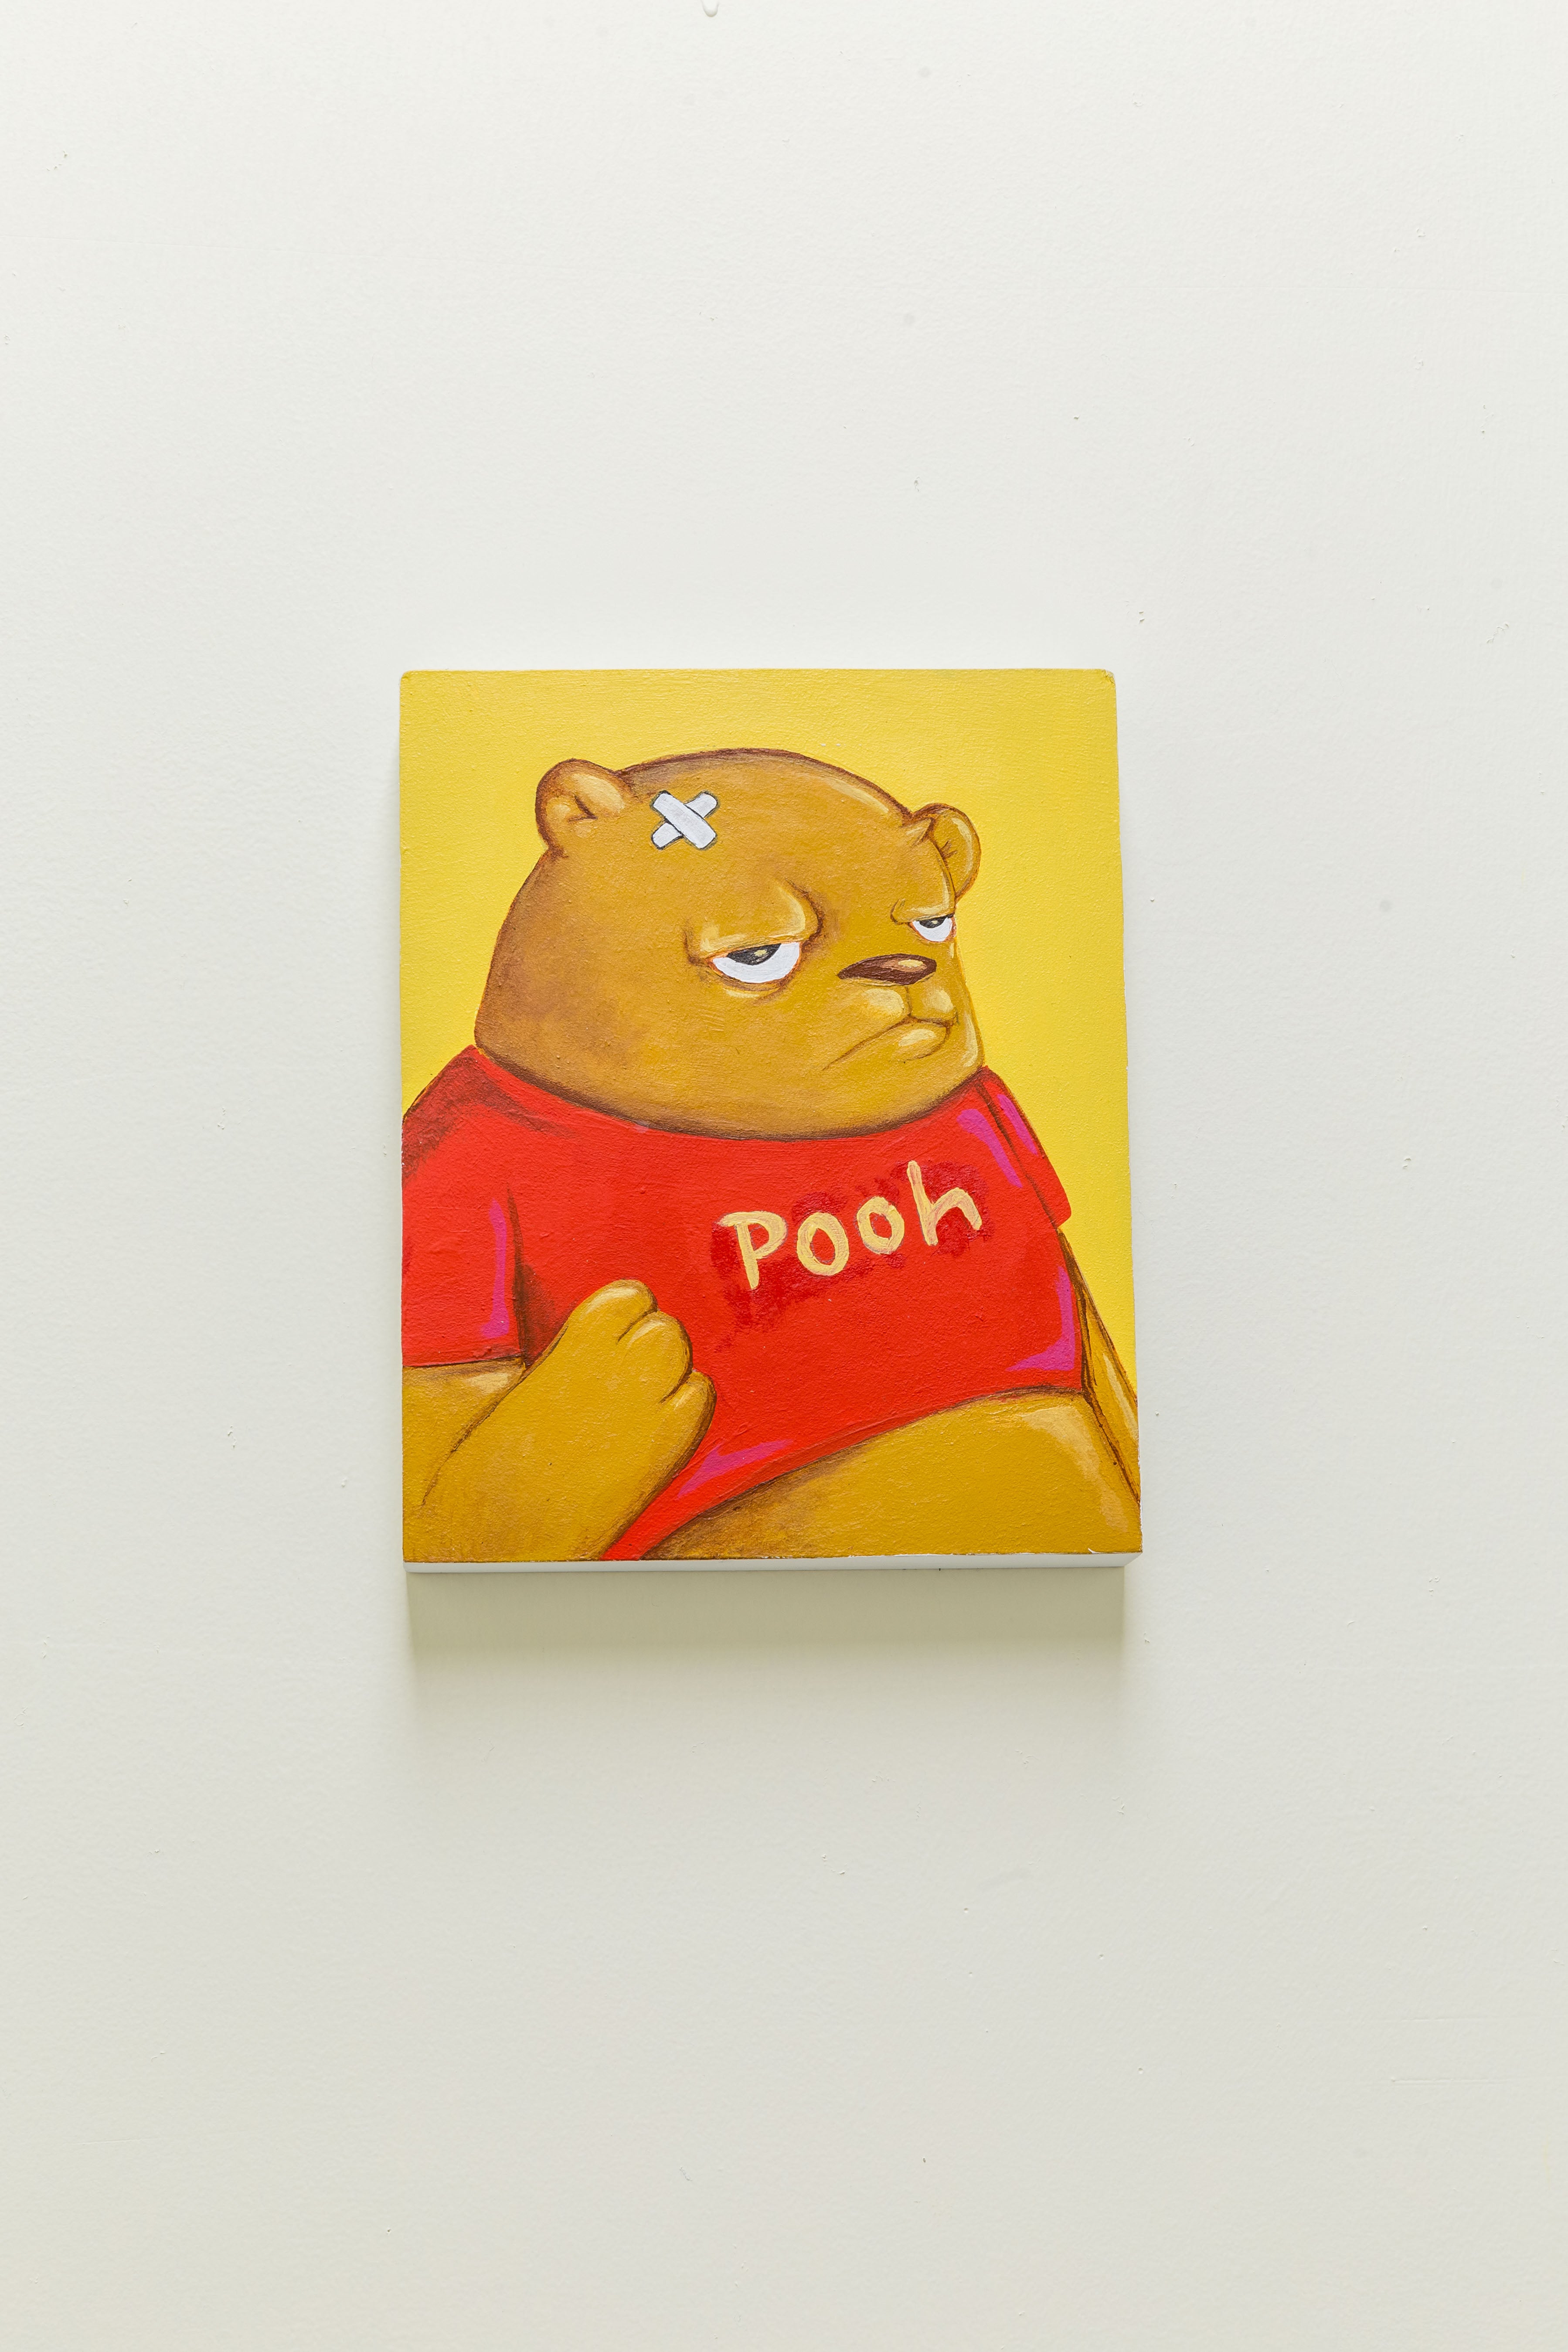 "I Am Pooh" by JC Rivera